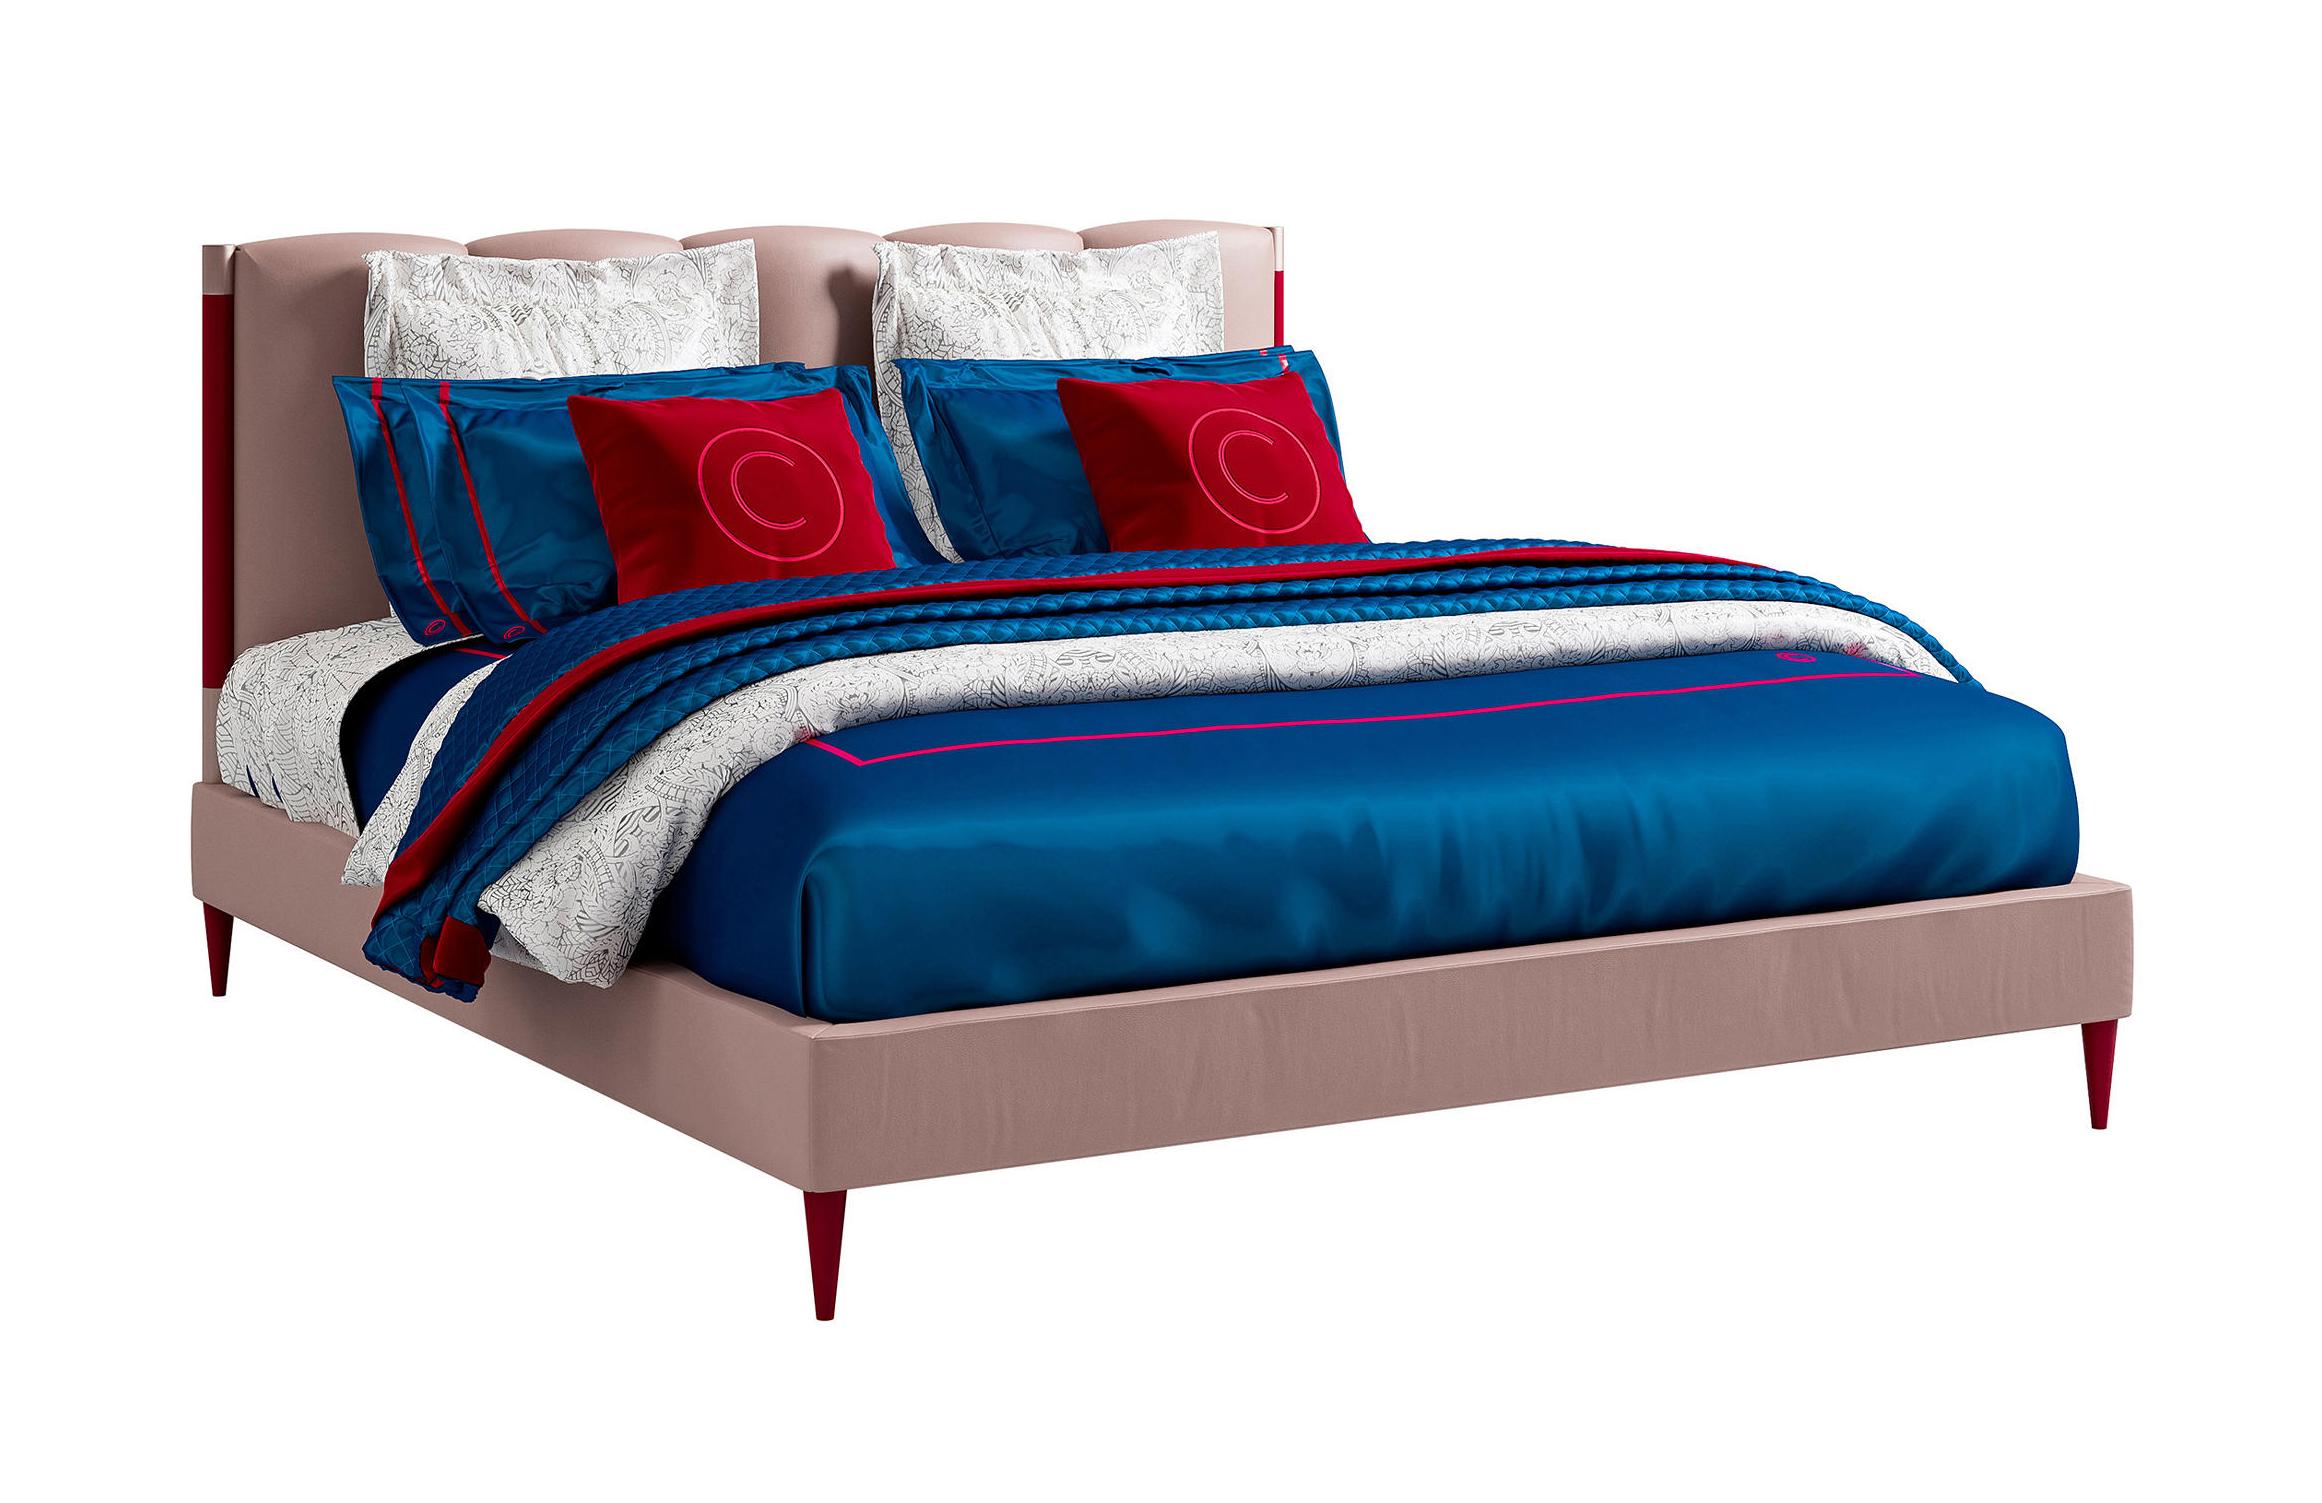 Luxurious Italian Canopy Bed